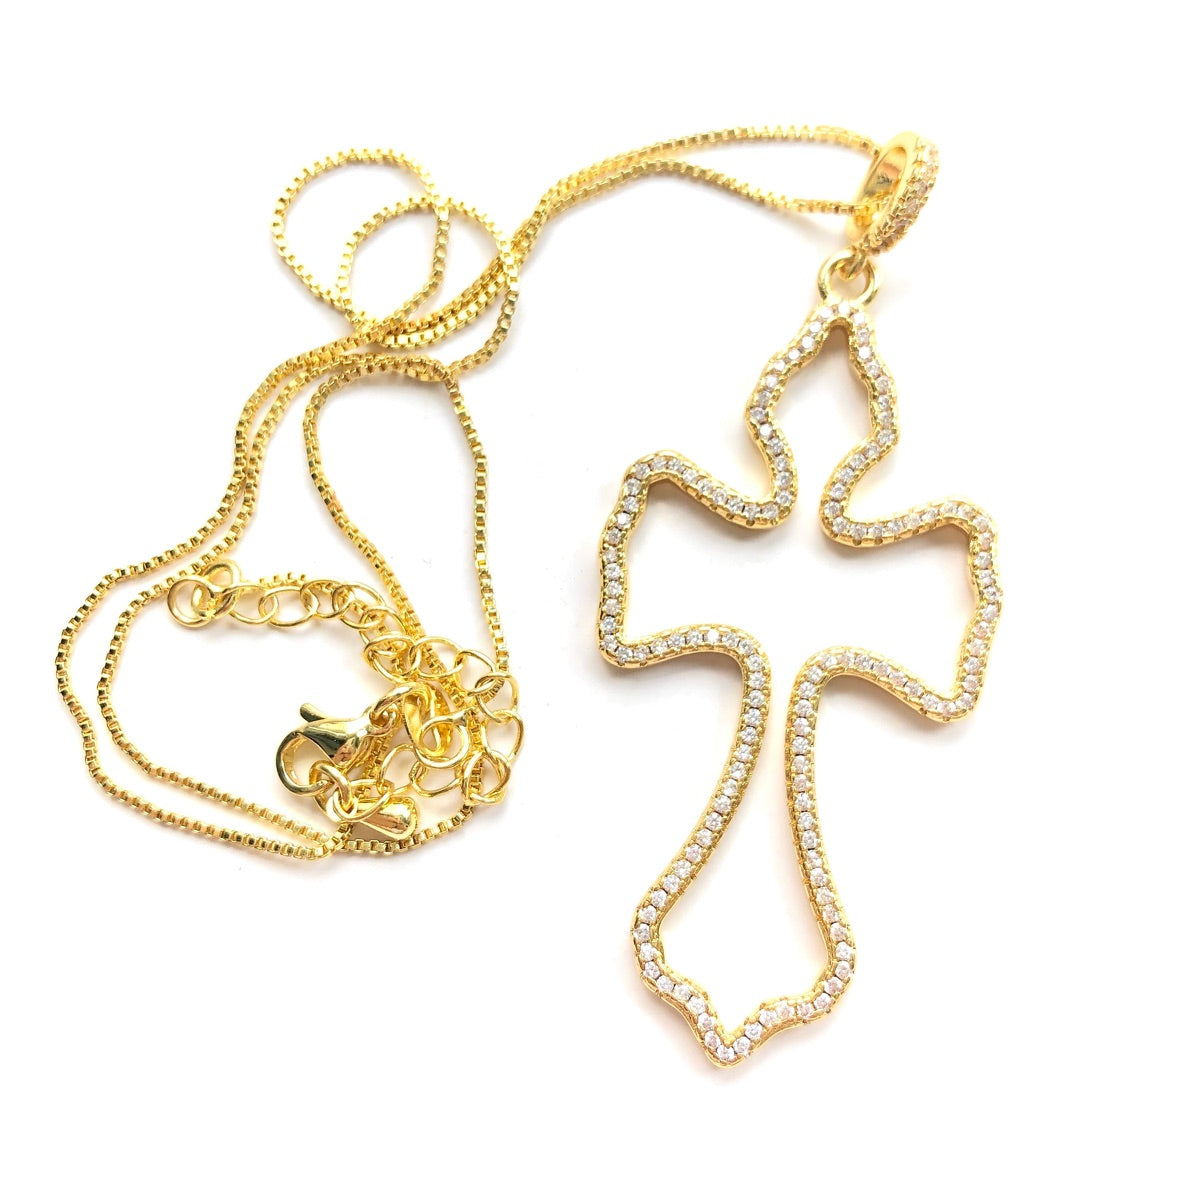 5pcs/lot CZ Paved Large Size Cross Necklaces Gold Necklaces Charms Beads Beyond